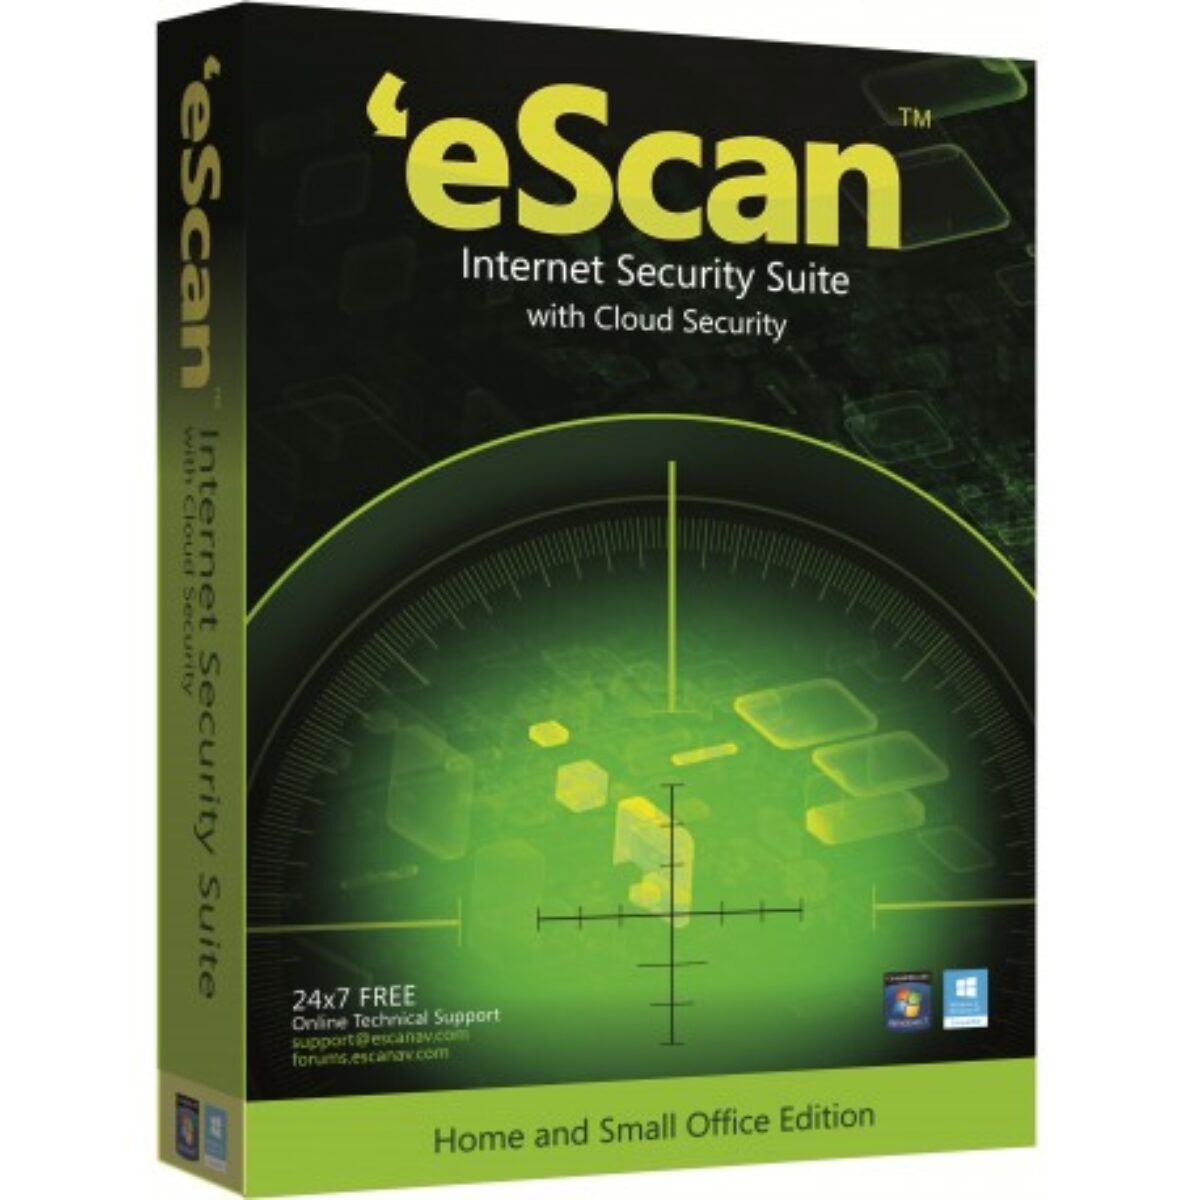 escan serial key free